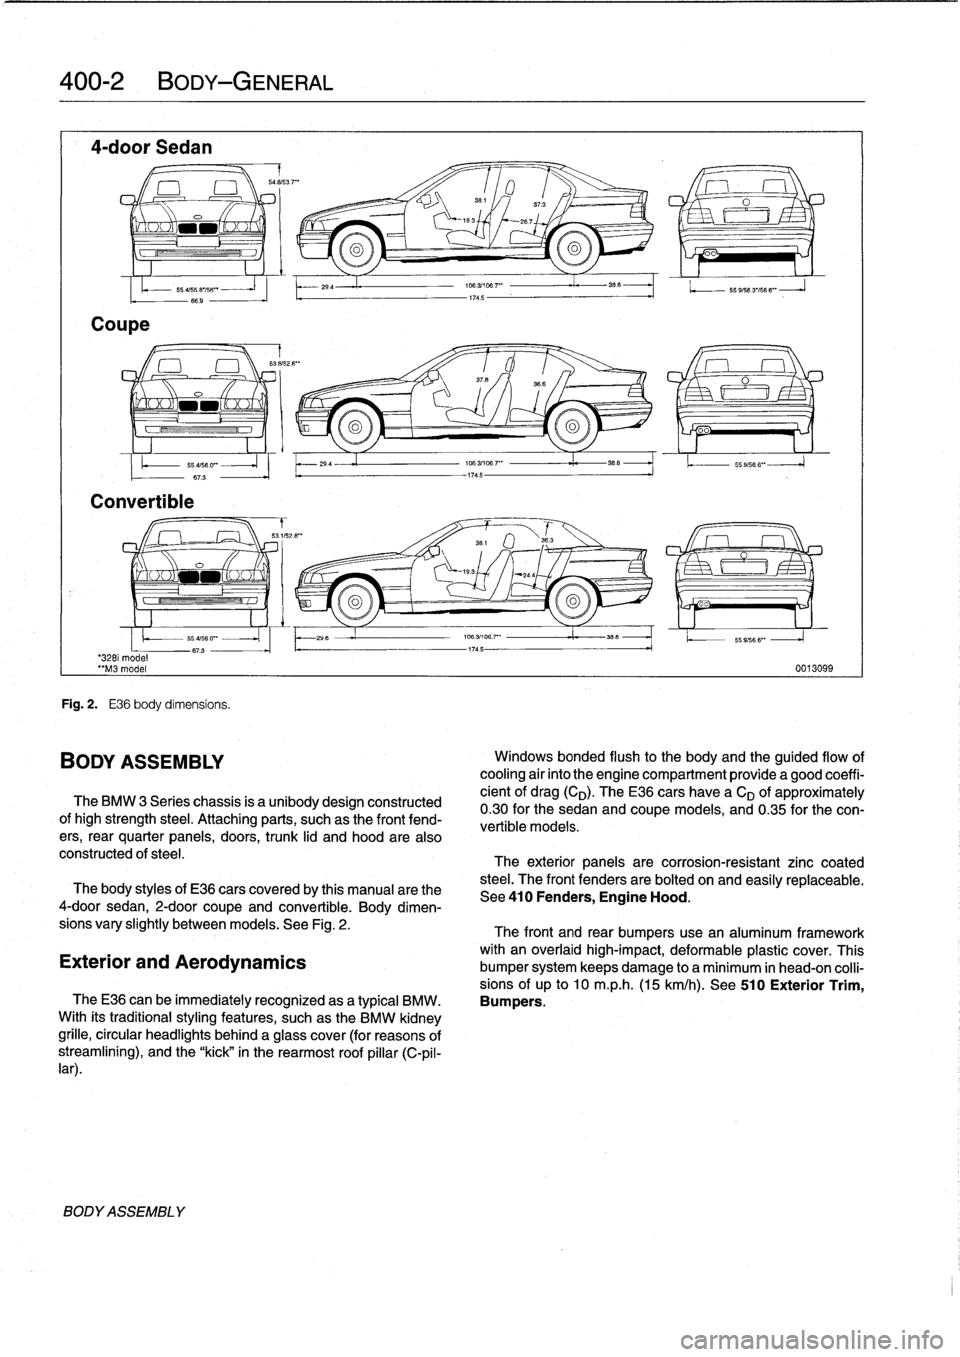 BMW M3 1993 E36 Workshop Manual 
400-2
BODY-GENERAL

4-door
Sedan

Coupe

-
saas3
.7""

351
/

	

37
.3
O

	

I
x
`-193

	

267

o
oa

3281
model
"M3
model

Convertible

BODYASSEMBLY

55
ass
.e
iss
""
-
66
.9
-

Fig
.
2
.

	

E36
b